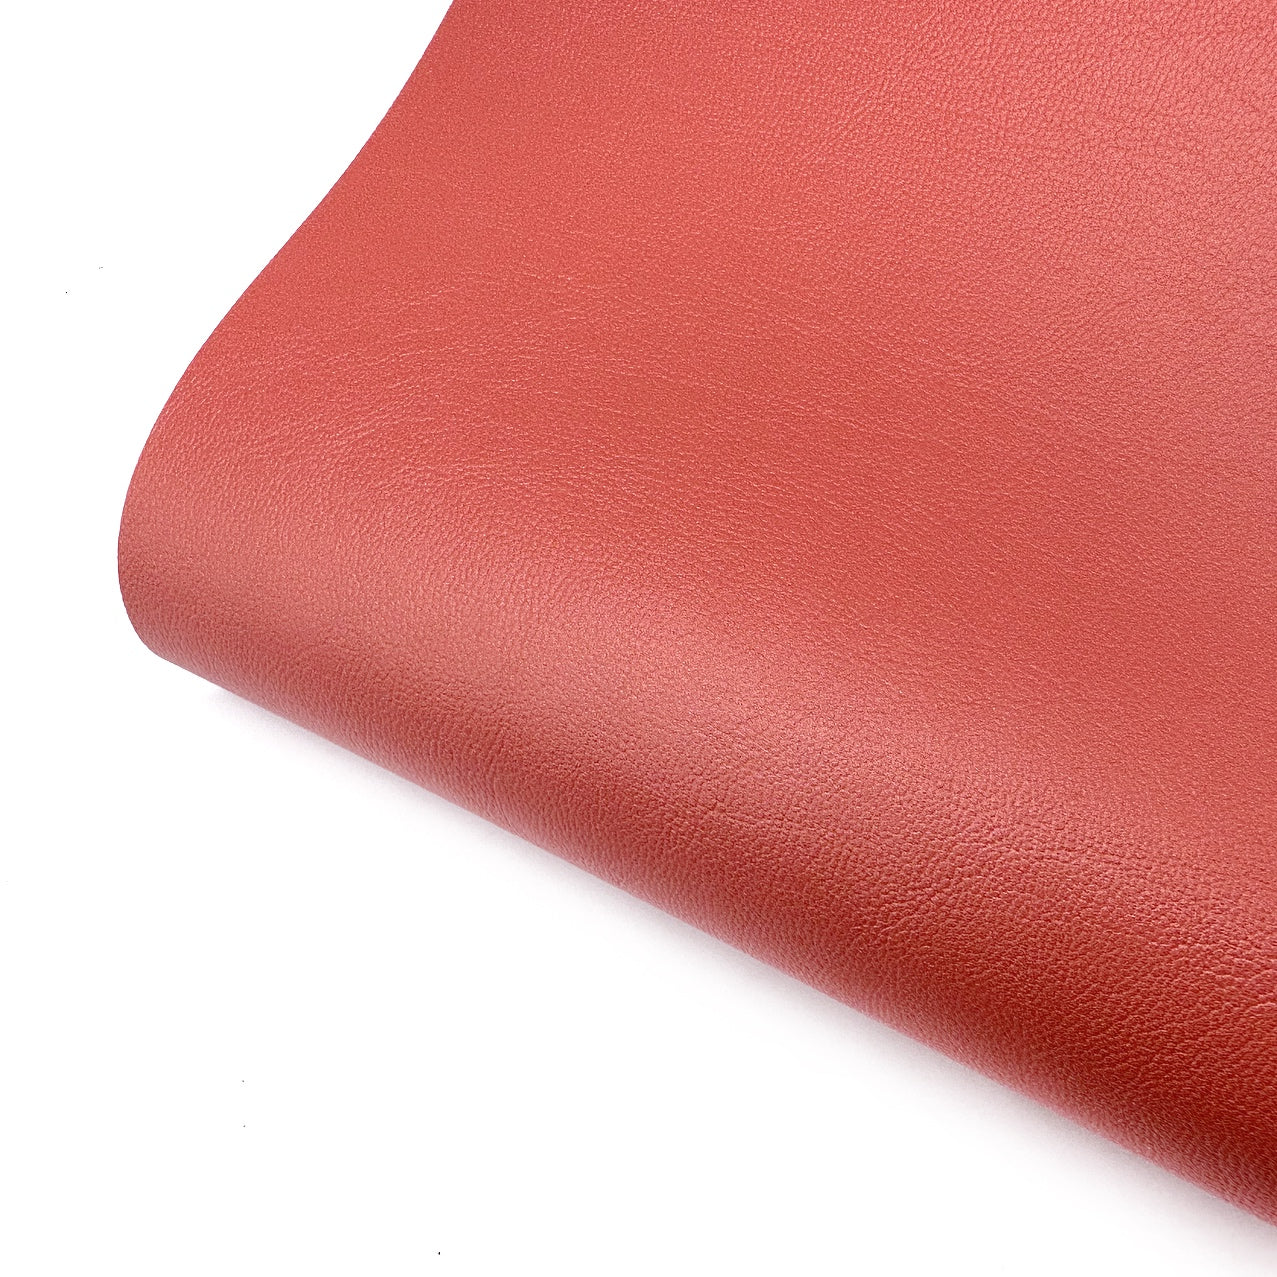 Coral Reef Core Colour Premium Faux Leather Fabric Sheets